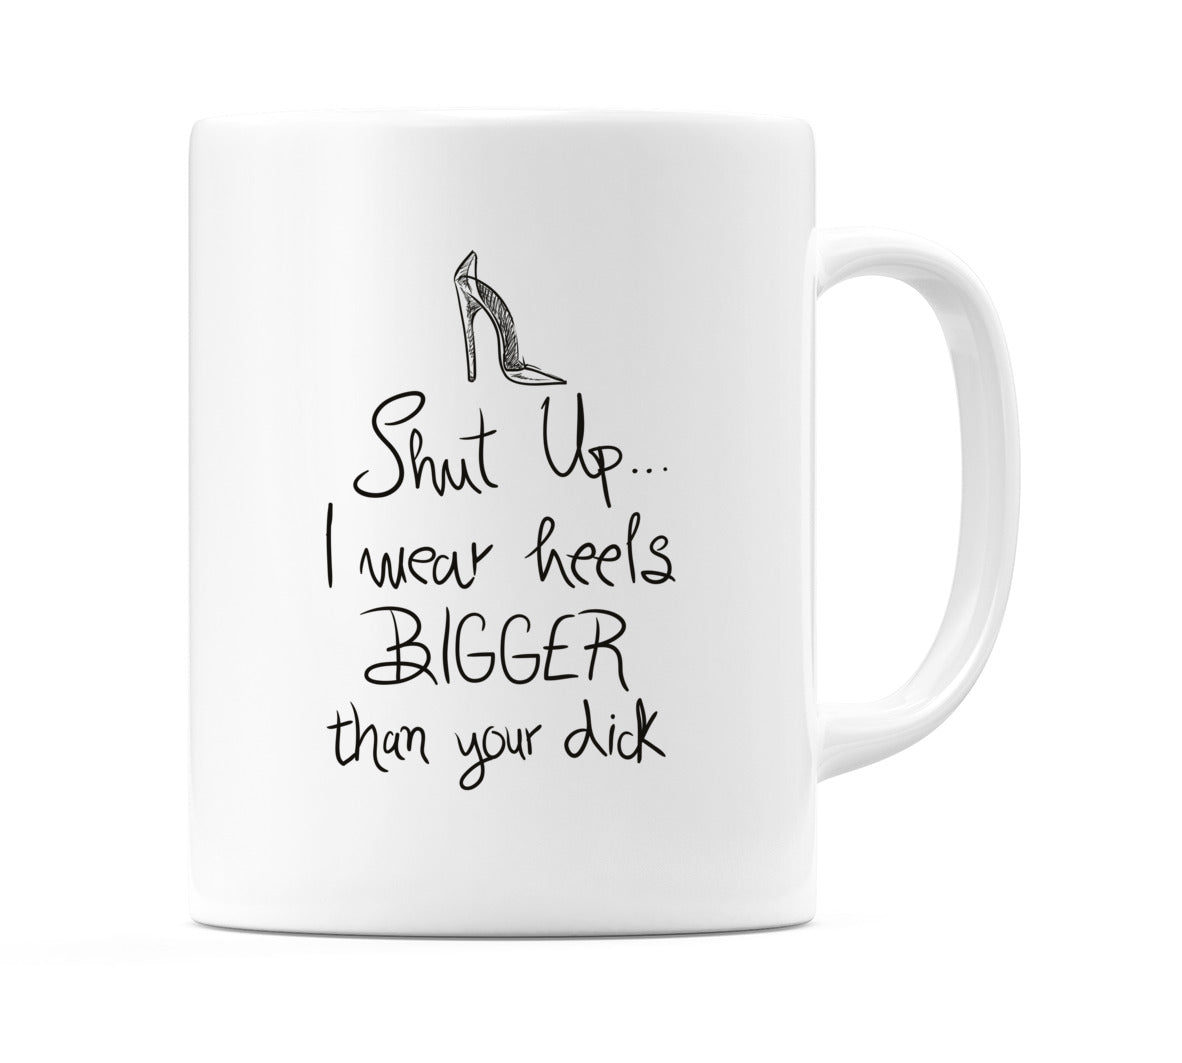 Shut up... I wear heels BIGGER than your d*ck Mug